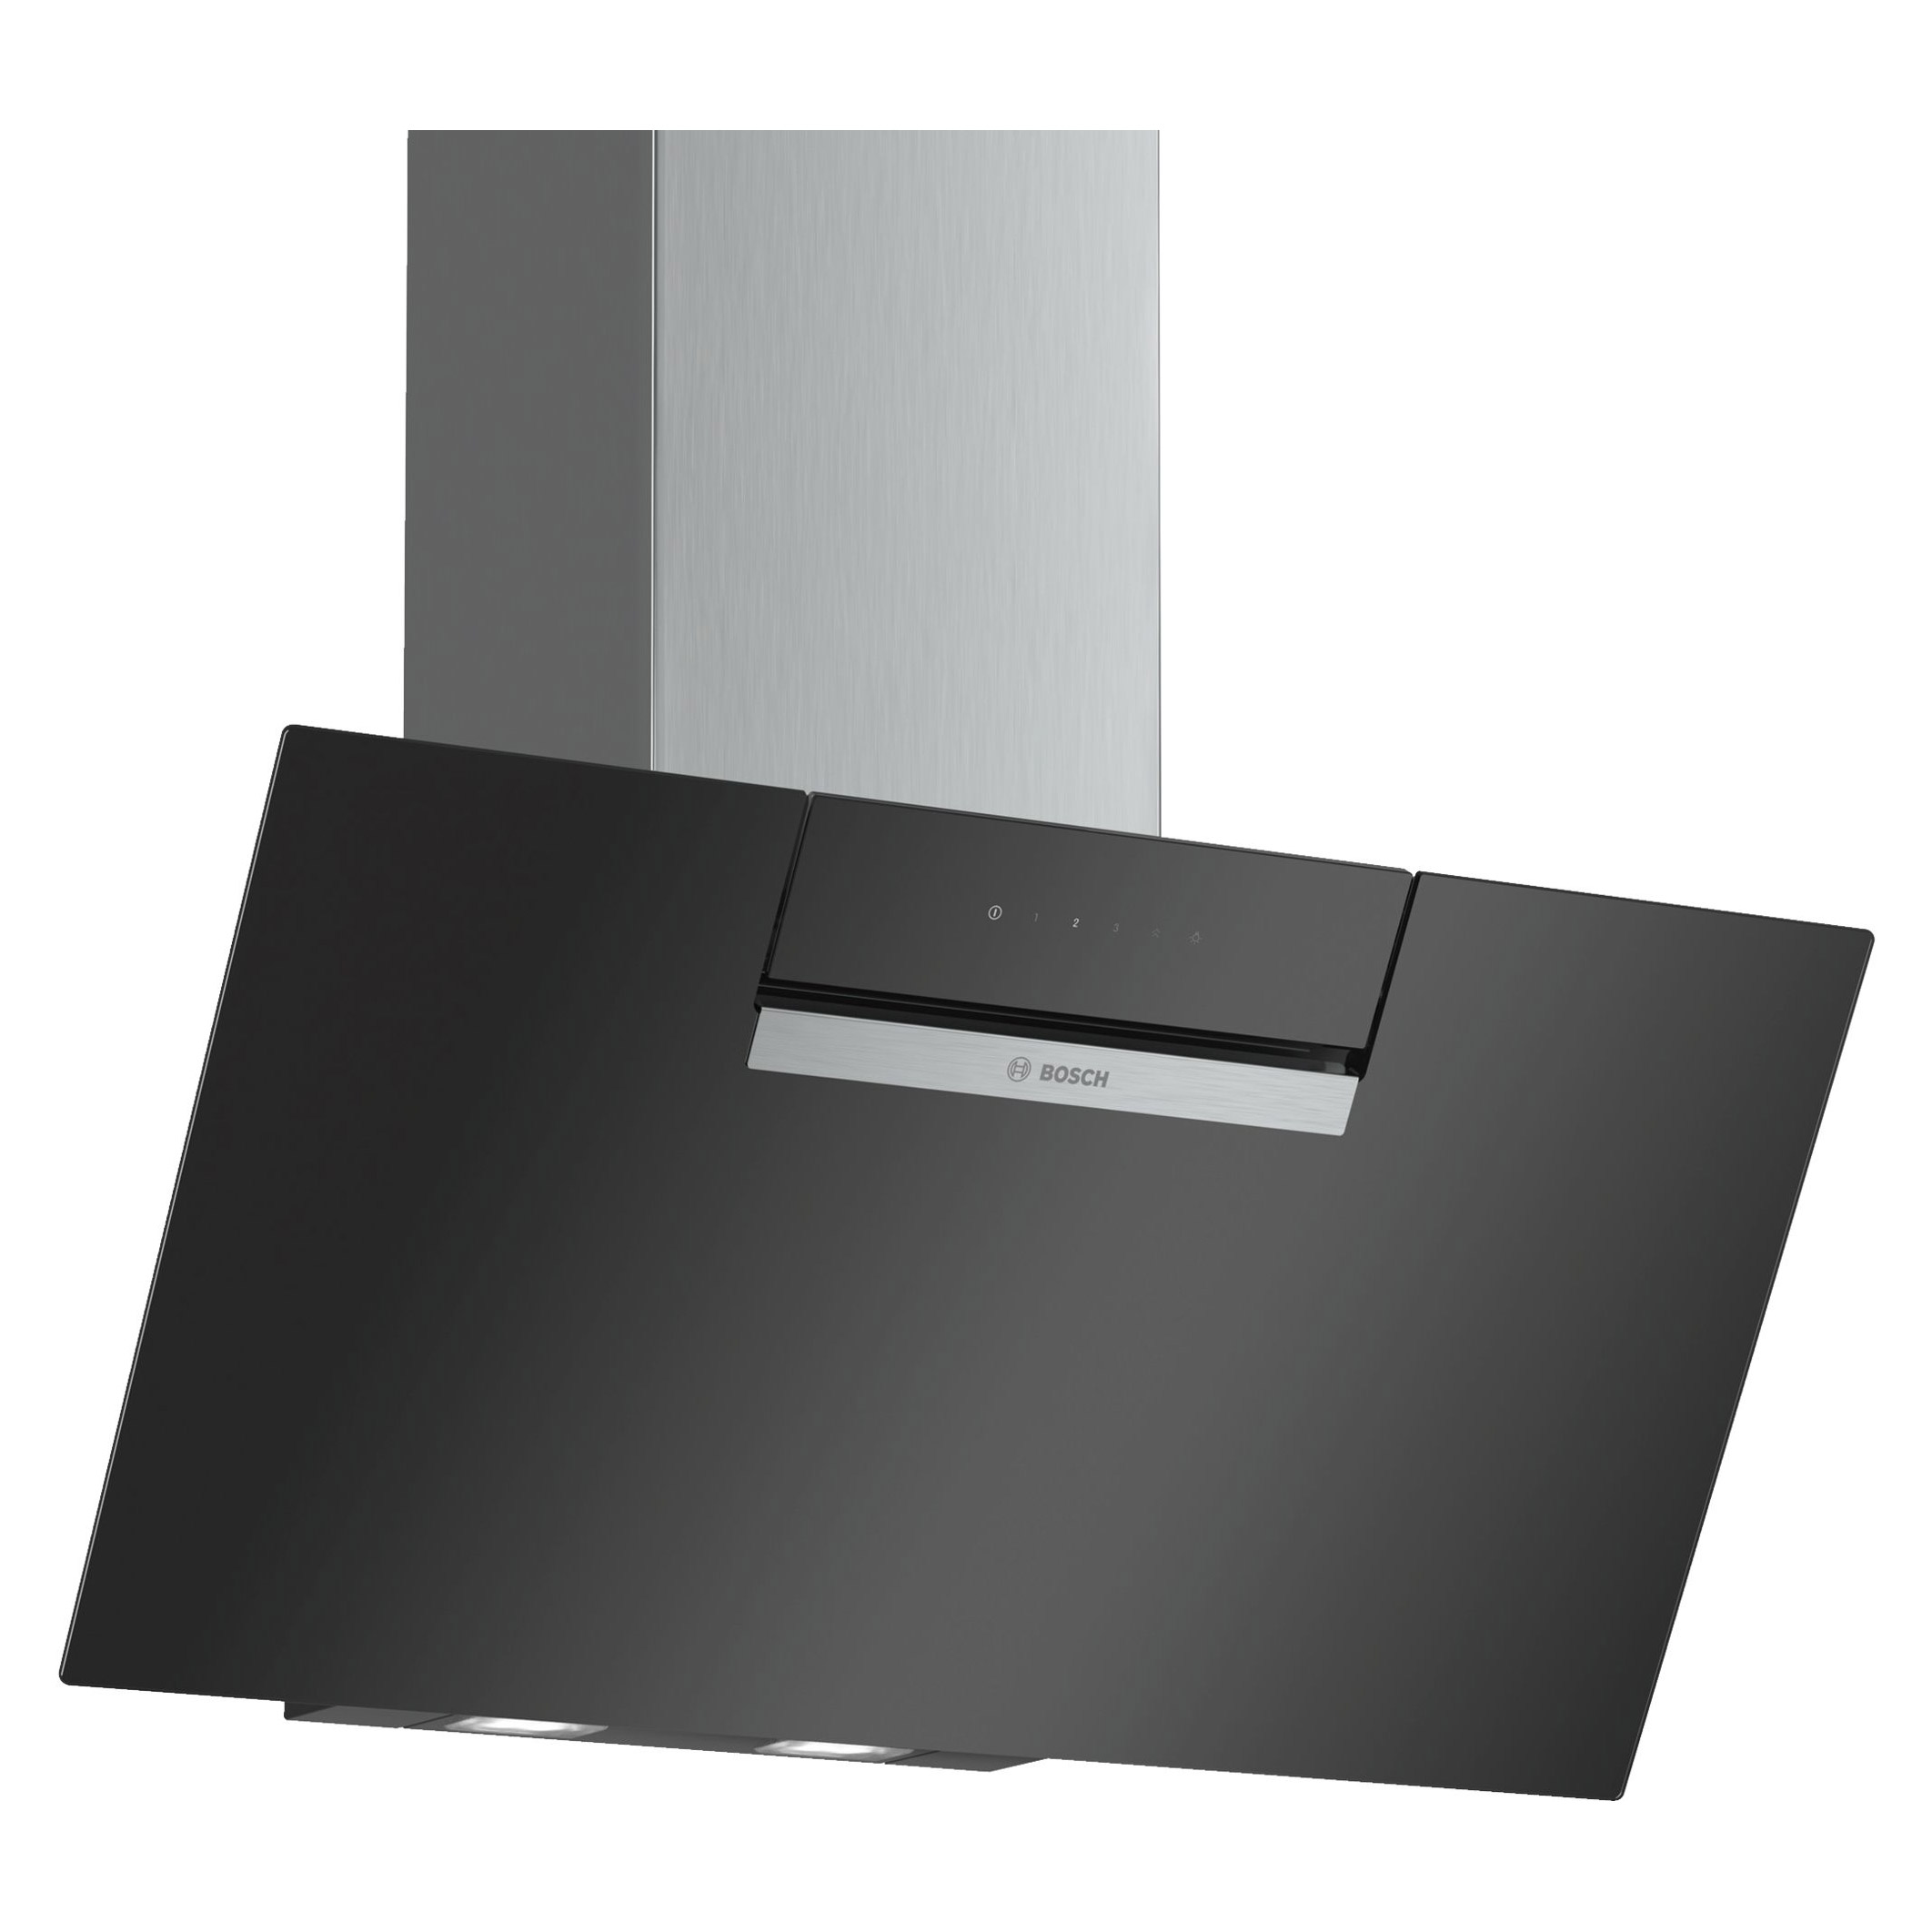 Image of Bosch DWK87EM60B Series 2 80cm Angled Chimney Hood in Black Glass